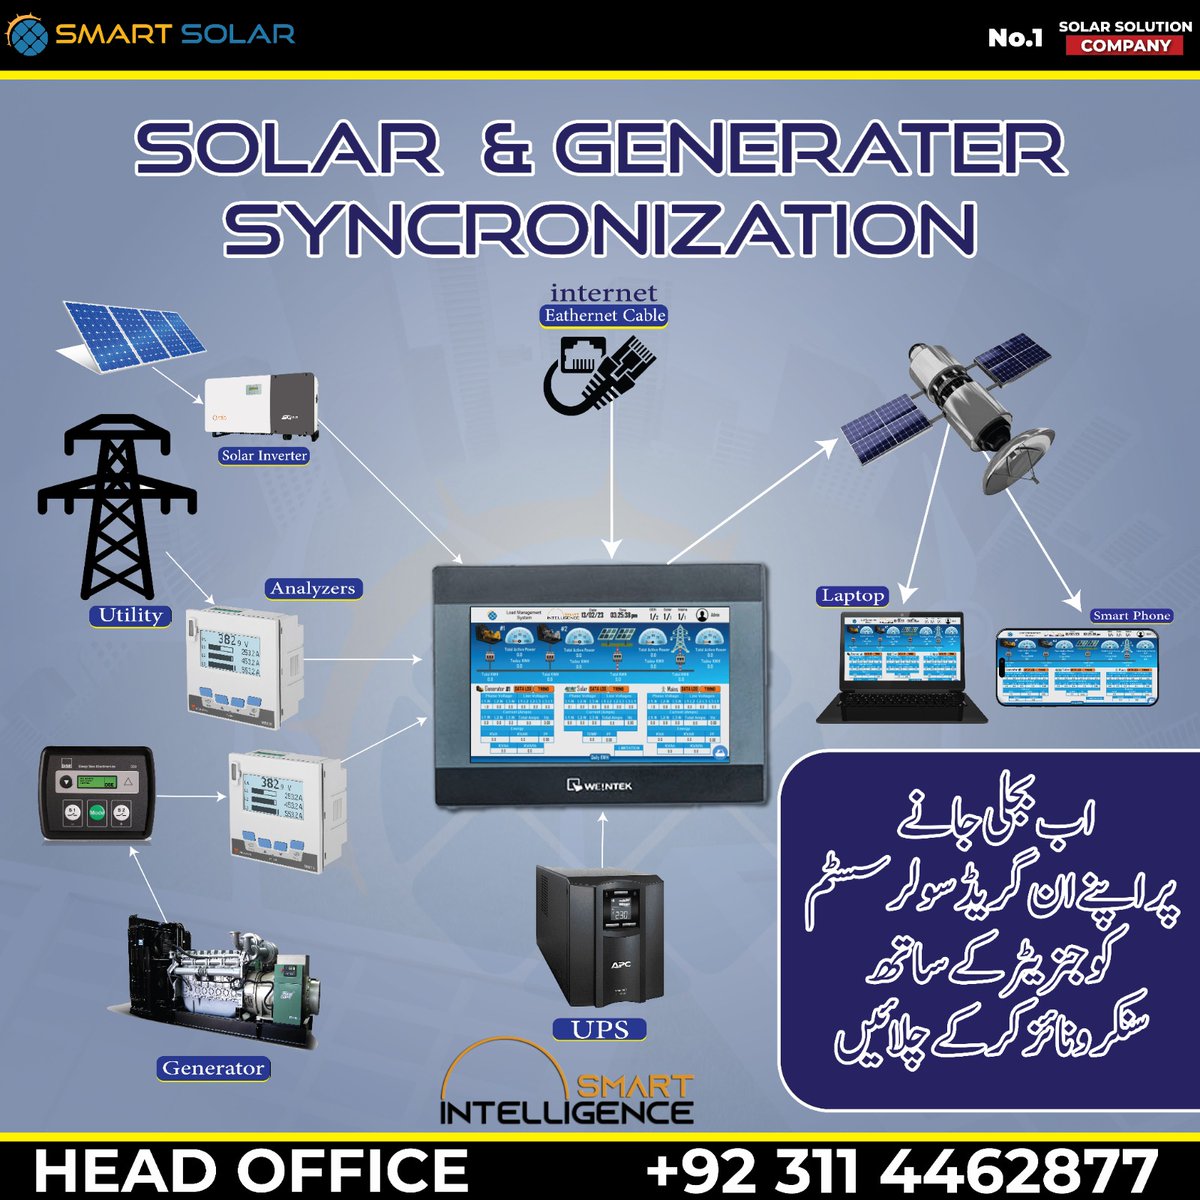 Now synchronized generator with your Solar system! 
For more details please contact 0311-4011444
#SmartSolar #Solar #SolarPanels #SolarBatteries #SolarInverters #SolarLights #SolarInstallation #Lahore #Punjab #Pakistan #longi #longisolar